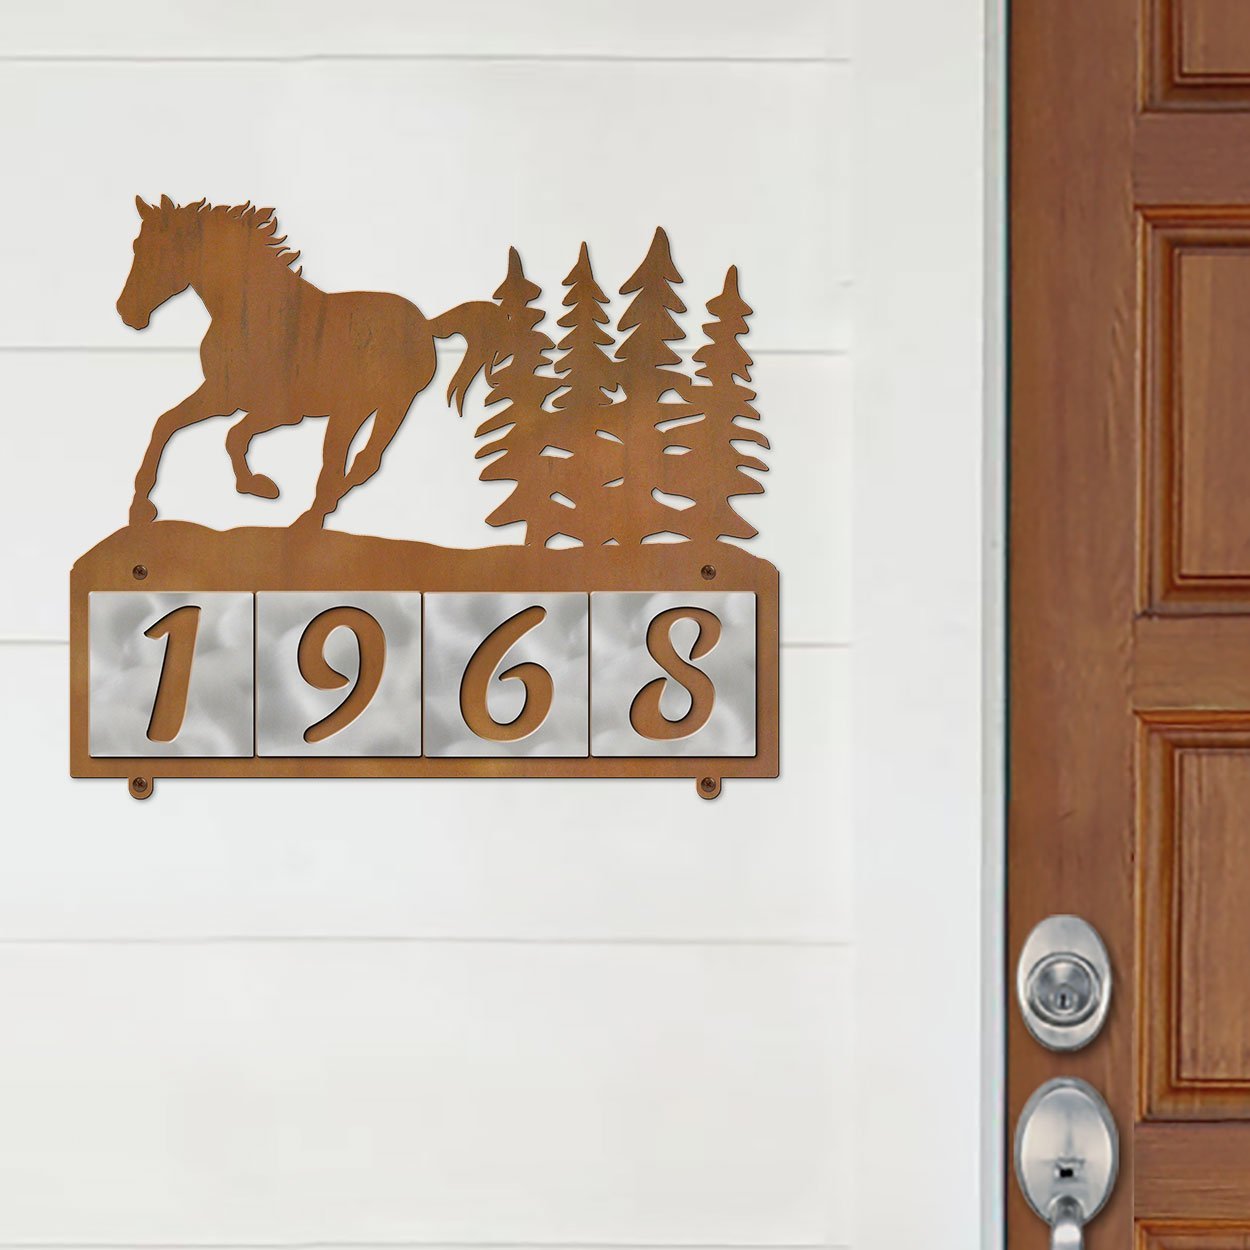 607104 - Running Horse Scene Design 4-Digit Horizontal 4-inch Tile Outdoor House Numbers